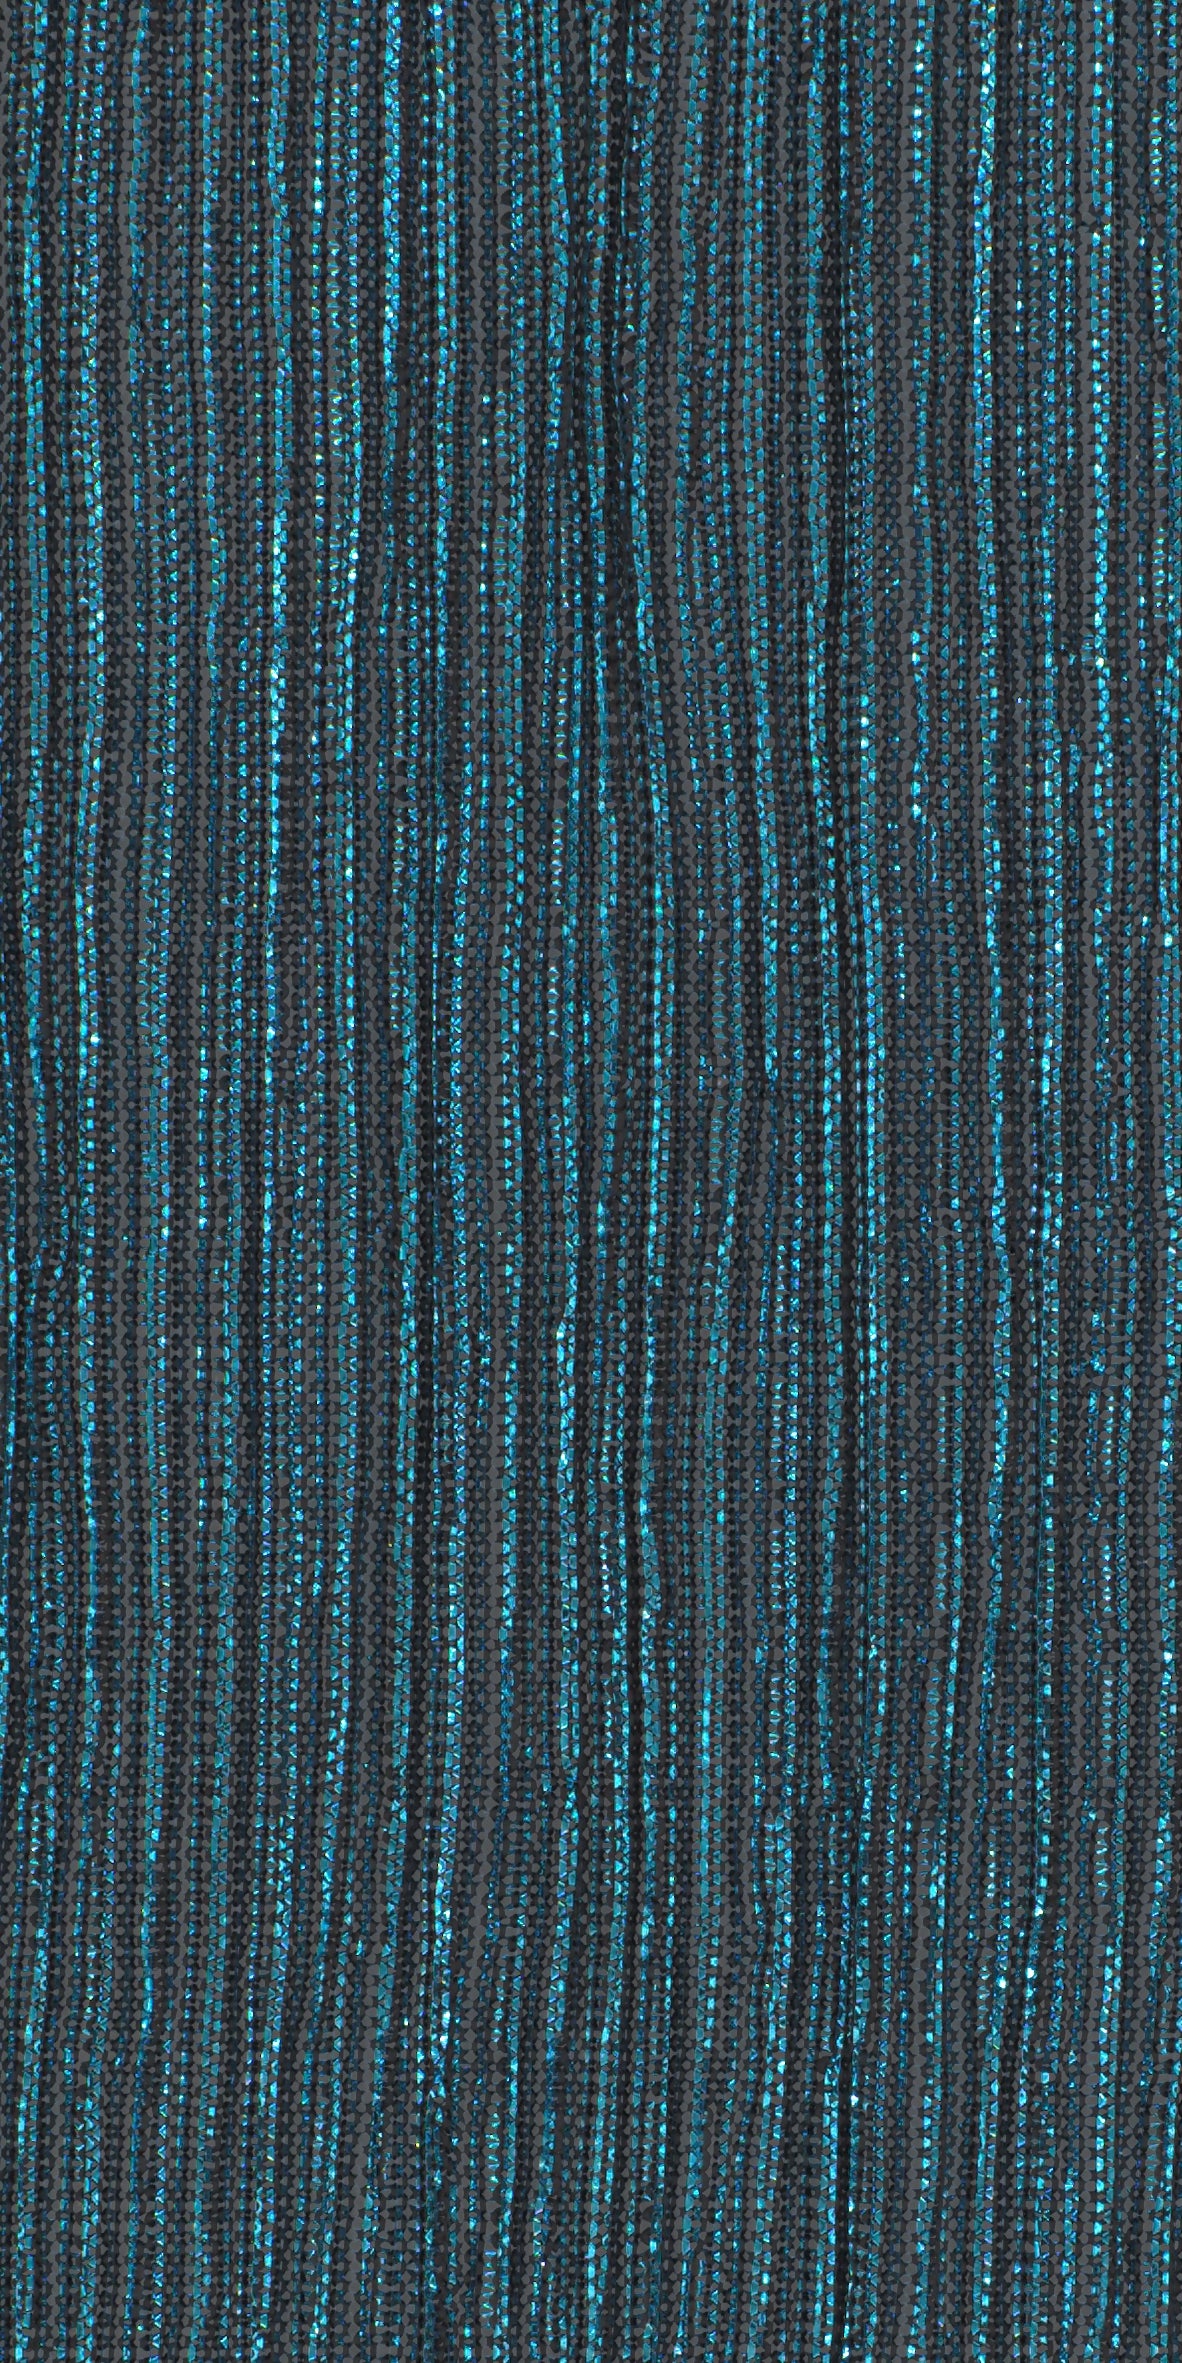 12006-03 Dark Turqoise Black Metallic Pleat Plain Dyed Blend 126g/yd 56&quot; black blend blue knit metallic plain dyed pleat ppl new Metallic, Pleat - knit fabric - woven fabric - fabric company - fabric wholesale - fabric b2b - fabric factory - high quality fabric - hong kong fabric - fabric hk - acetate fabric - cotton fabric - linen fabric - metallic fabric - nylon fabric - polyester fabric - spandex fabric - chun wing hing - cwh hk - fabric worldwide ship - 針織布 - 梳織布 - 布料公司- 布料批發 - 香港布料 - 秦榮興